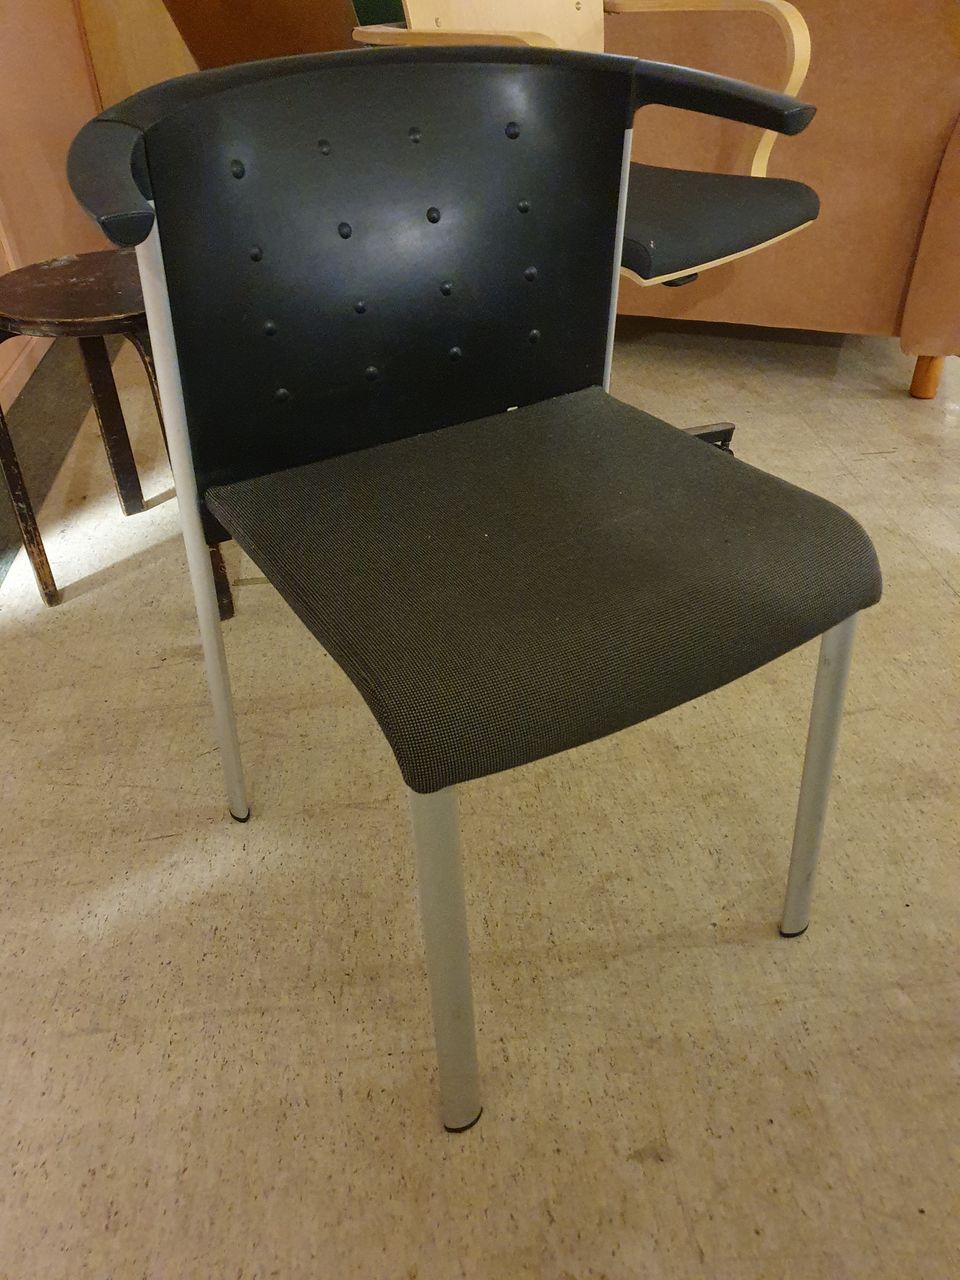 Musta tuoli